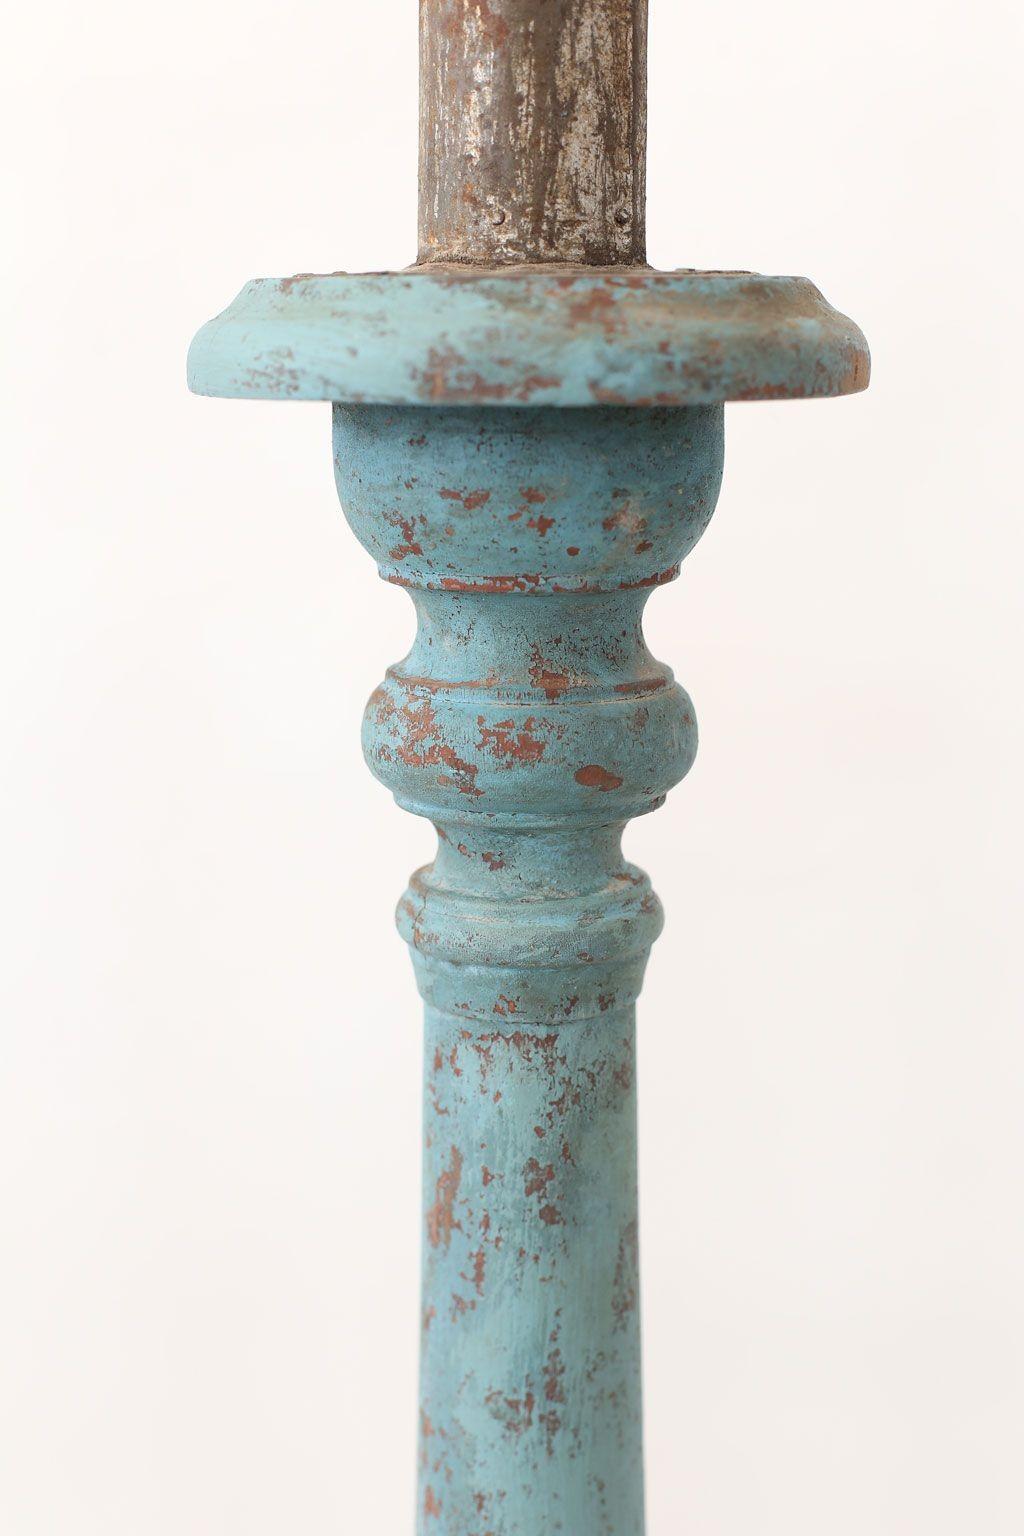 Hand-Carved Vintage Teal-Blue Painted Candlestick